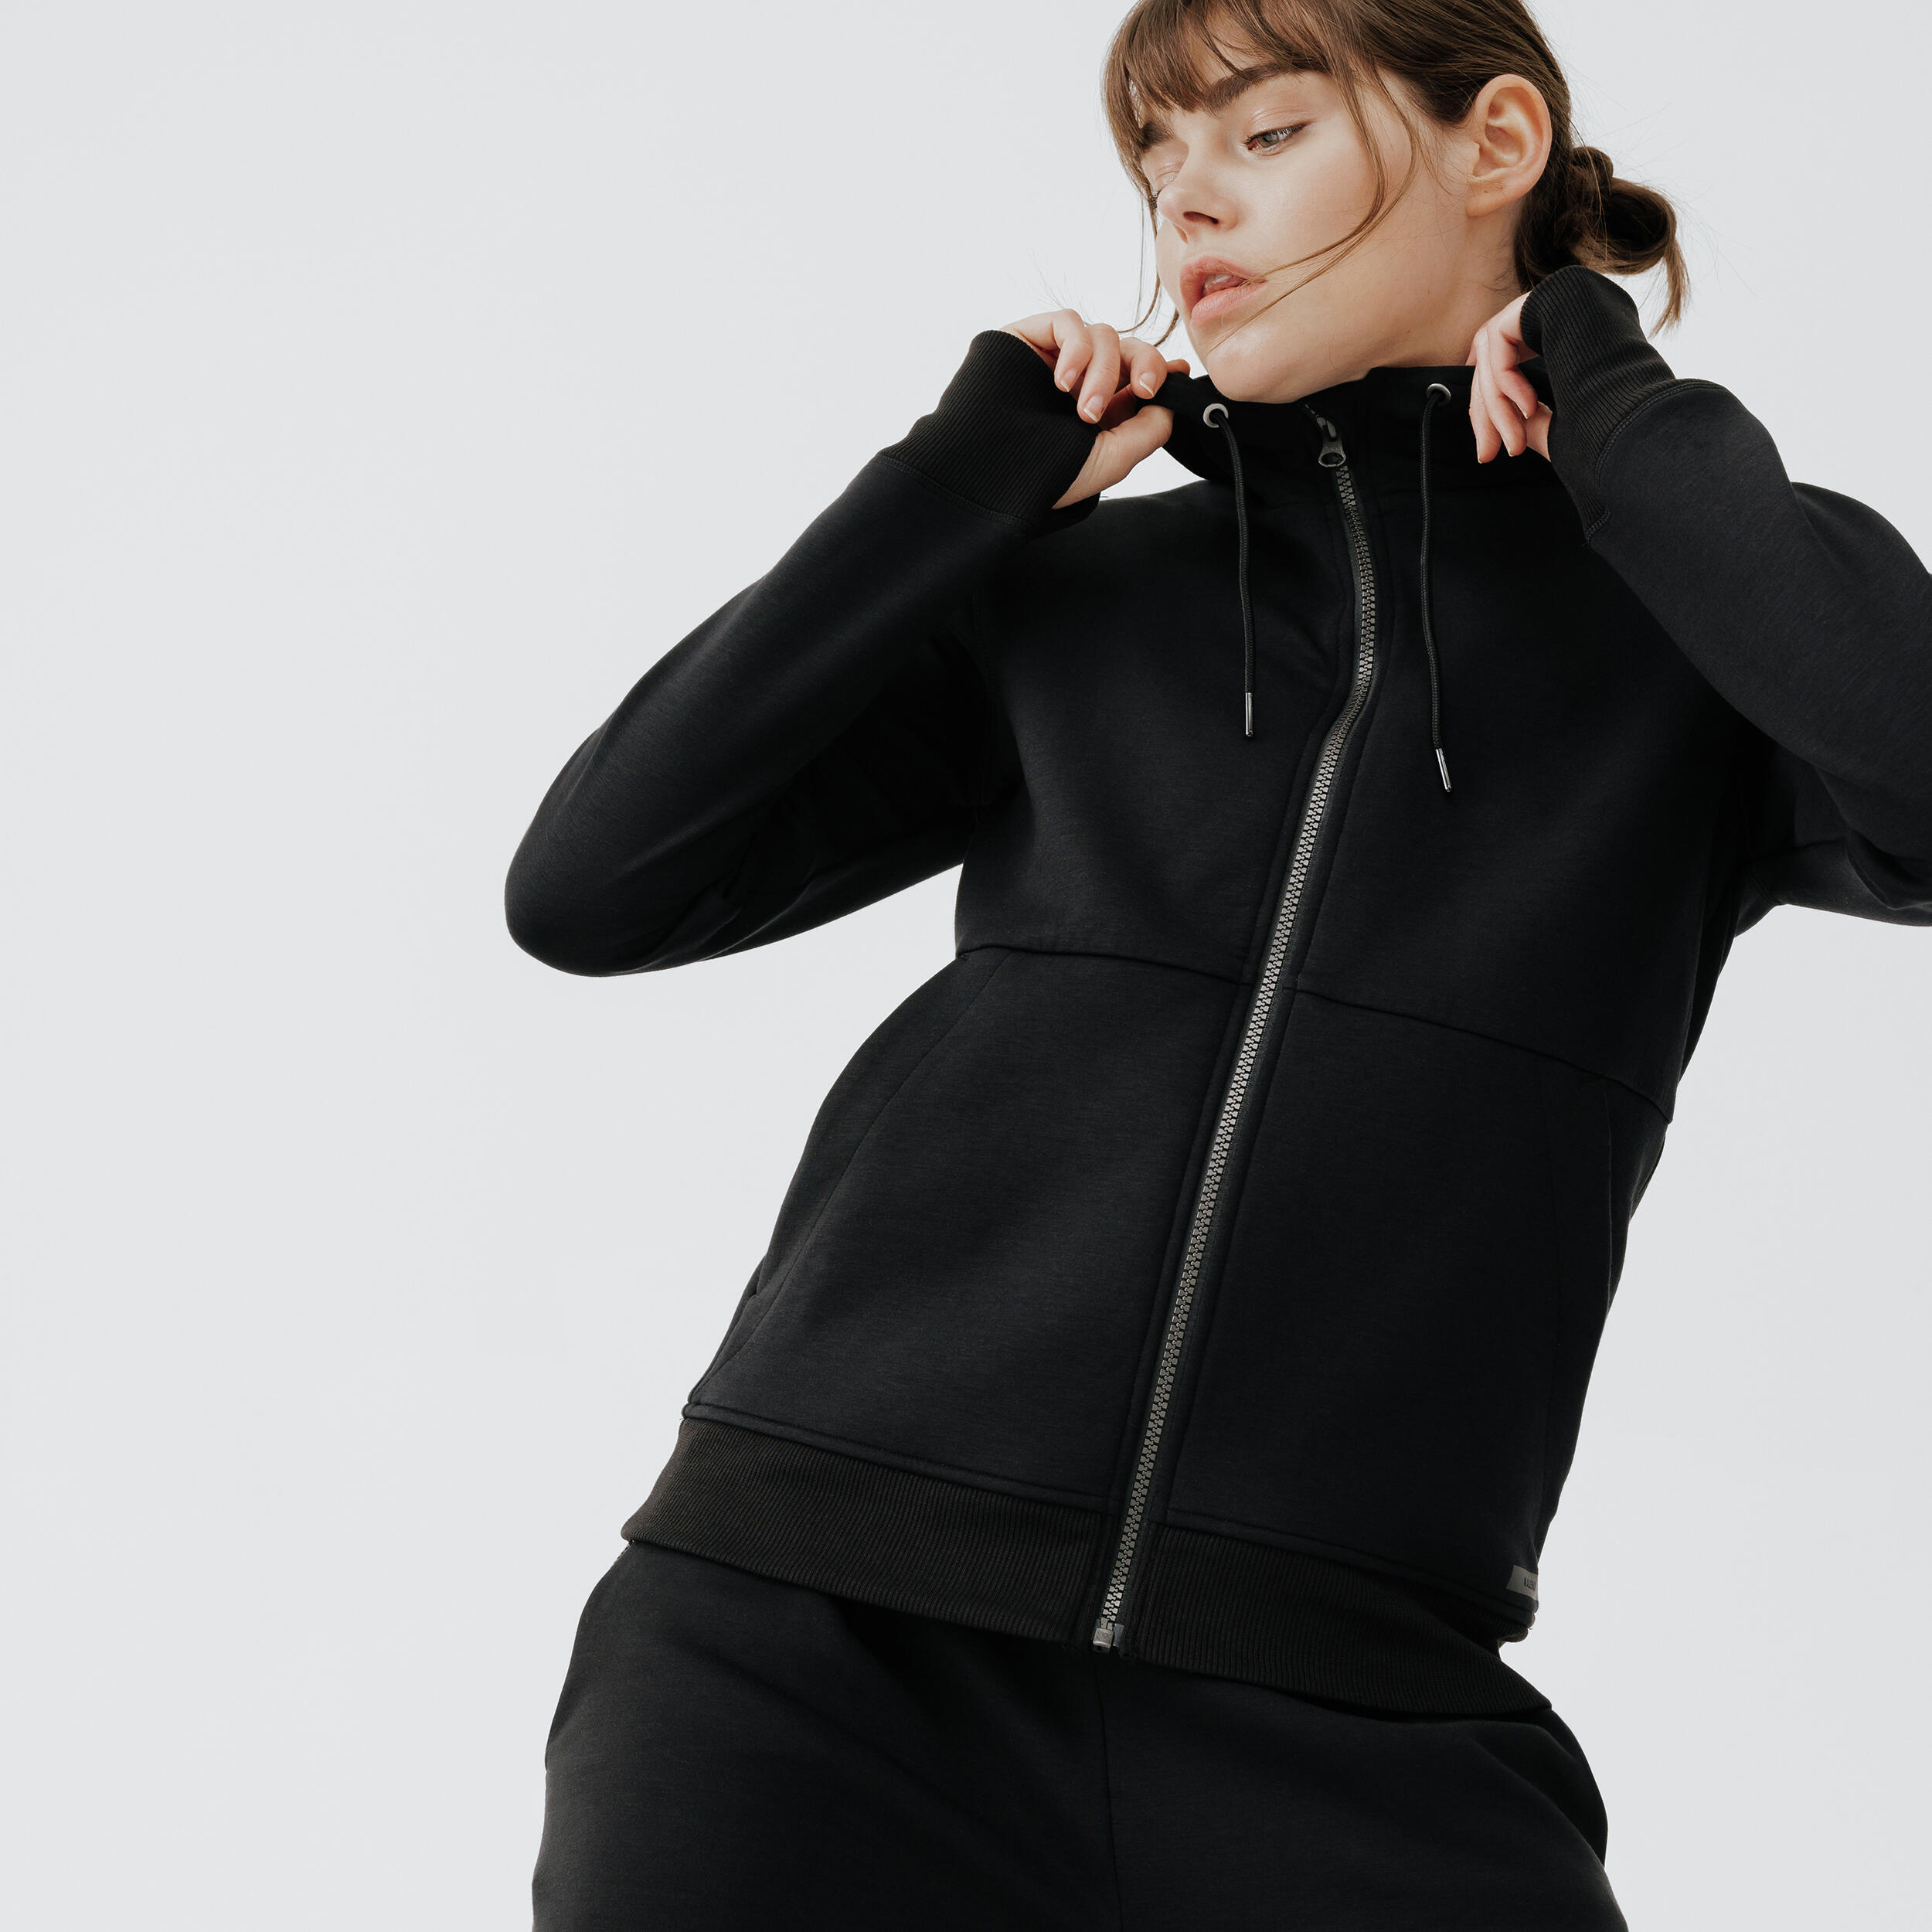 500 women's warm running/jogging hoodie - black 3/9